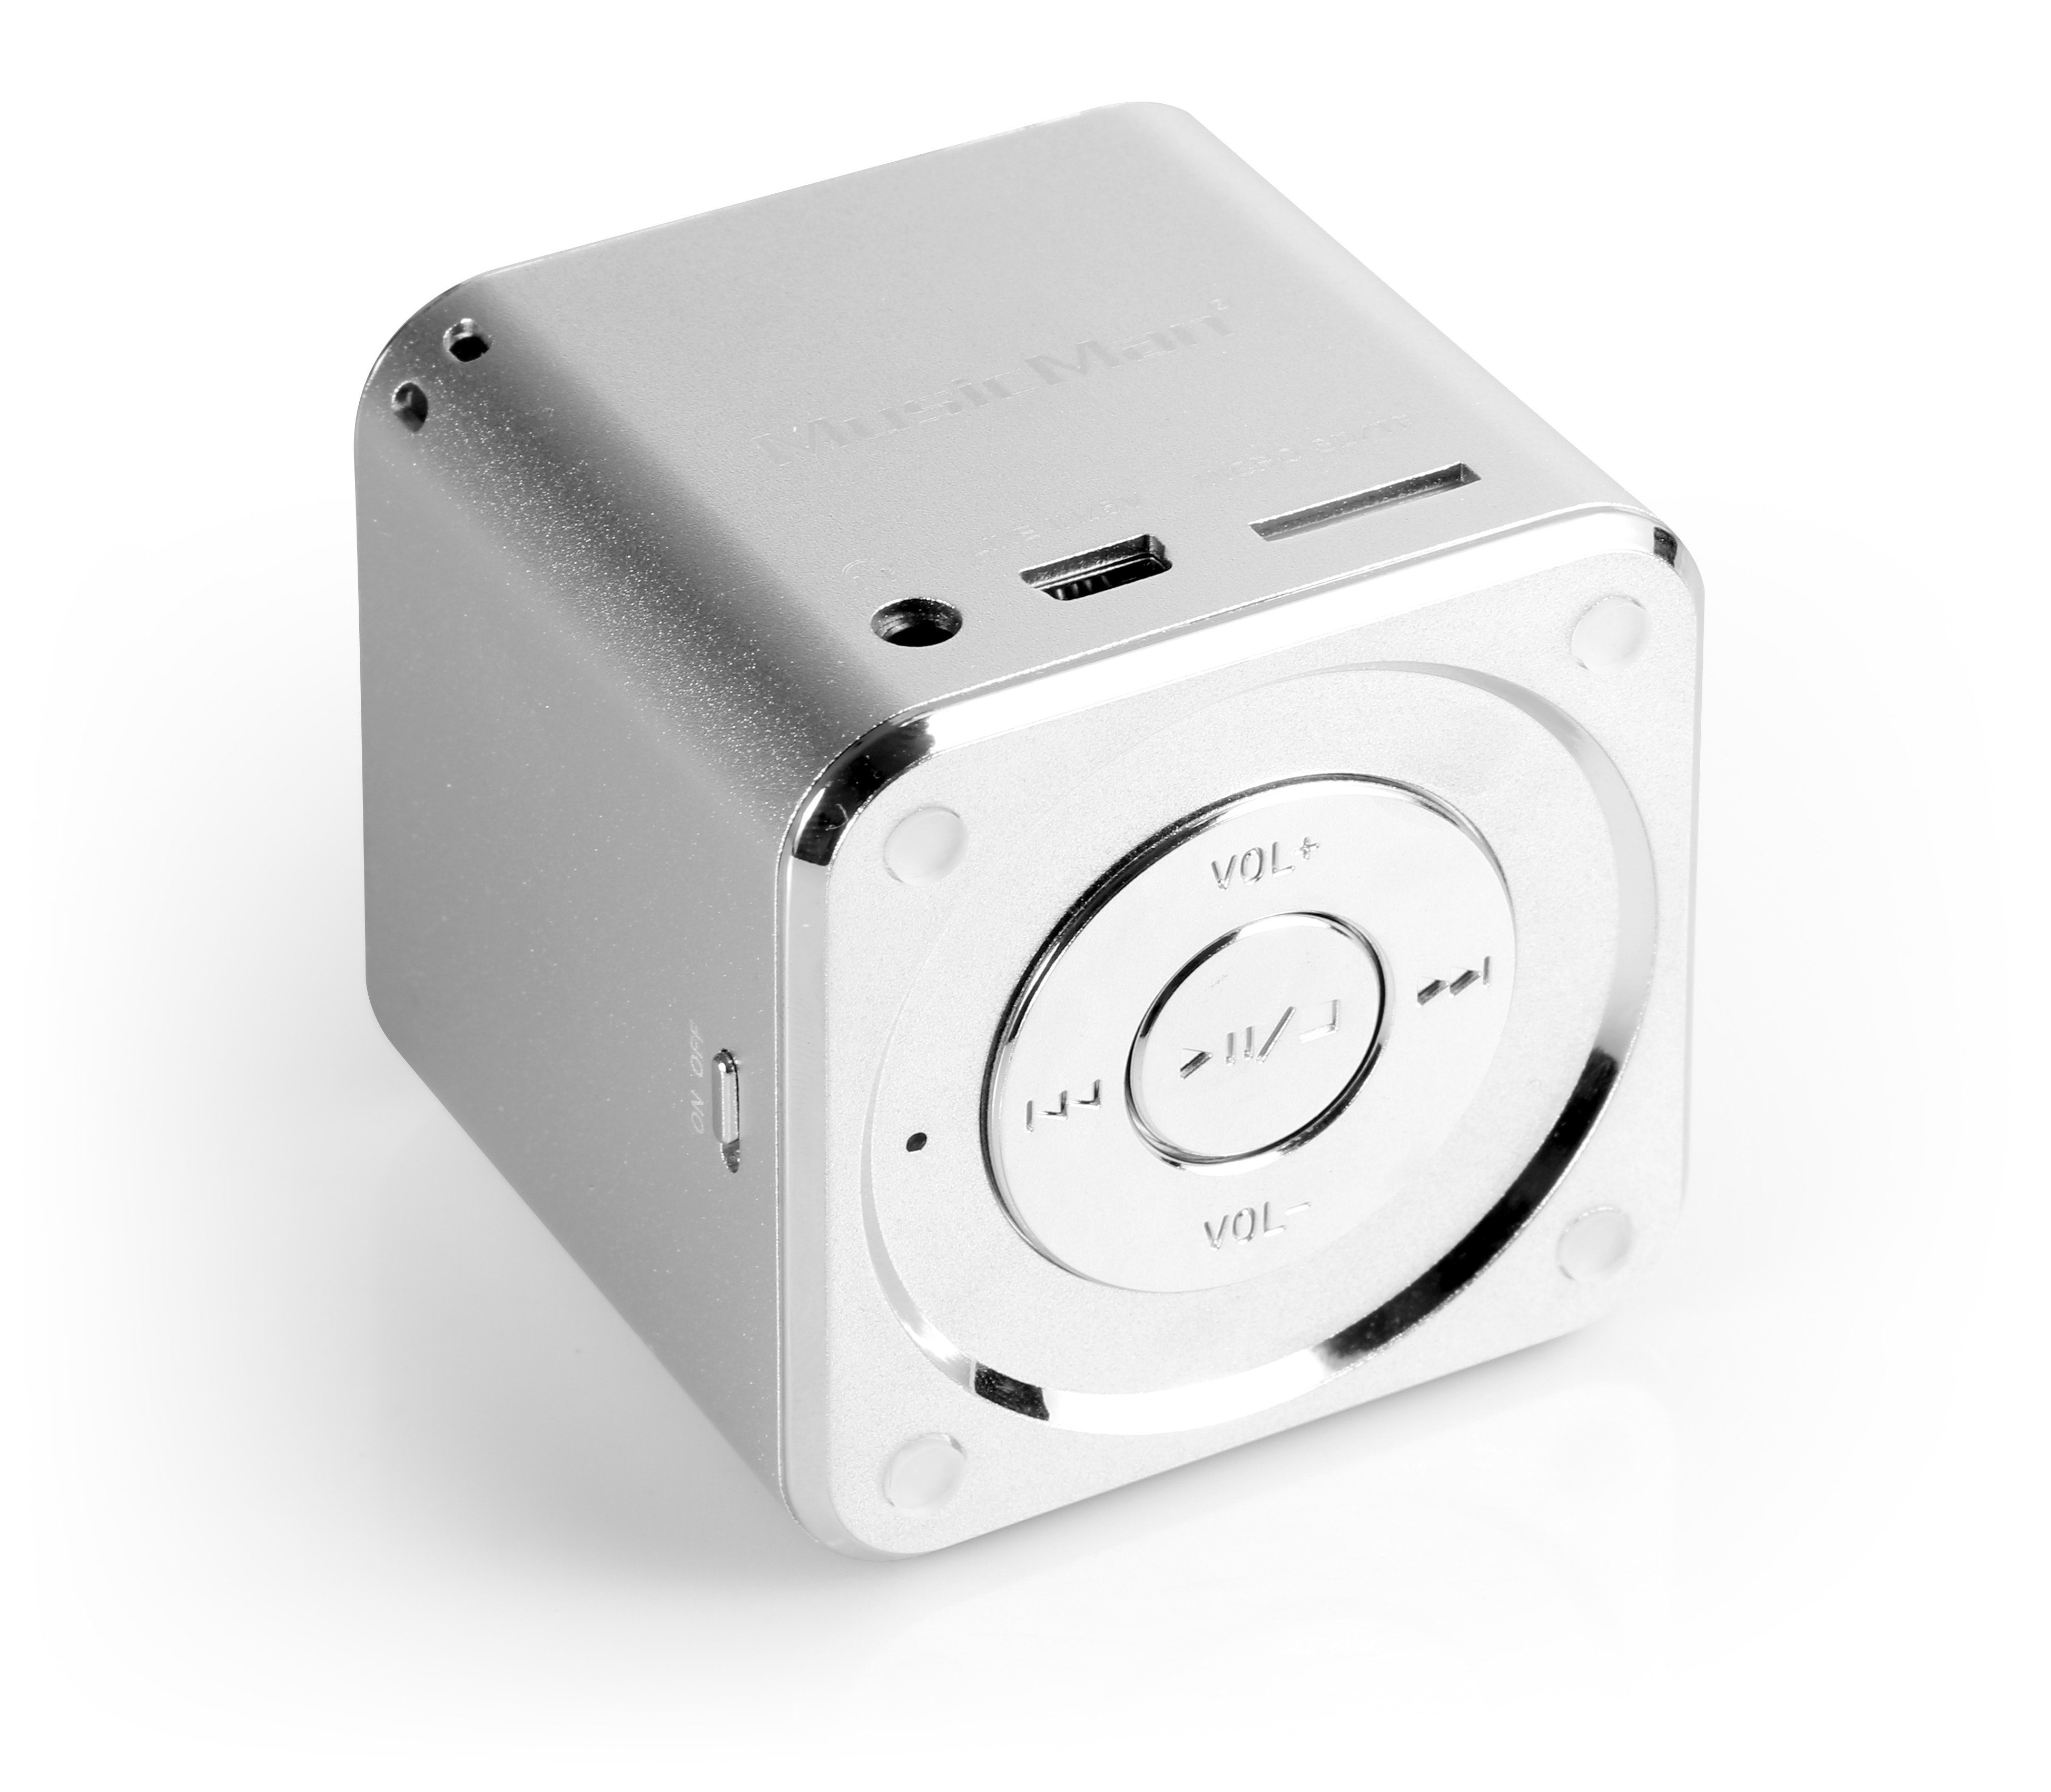 Altavoz Musicman Mini soundstation reproductor de mp3 usb soporte tarjetas microsd batería recargable 5 technaxx ar 3 w plata altavoces 1 15018000 4 10